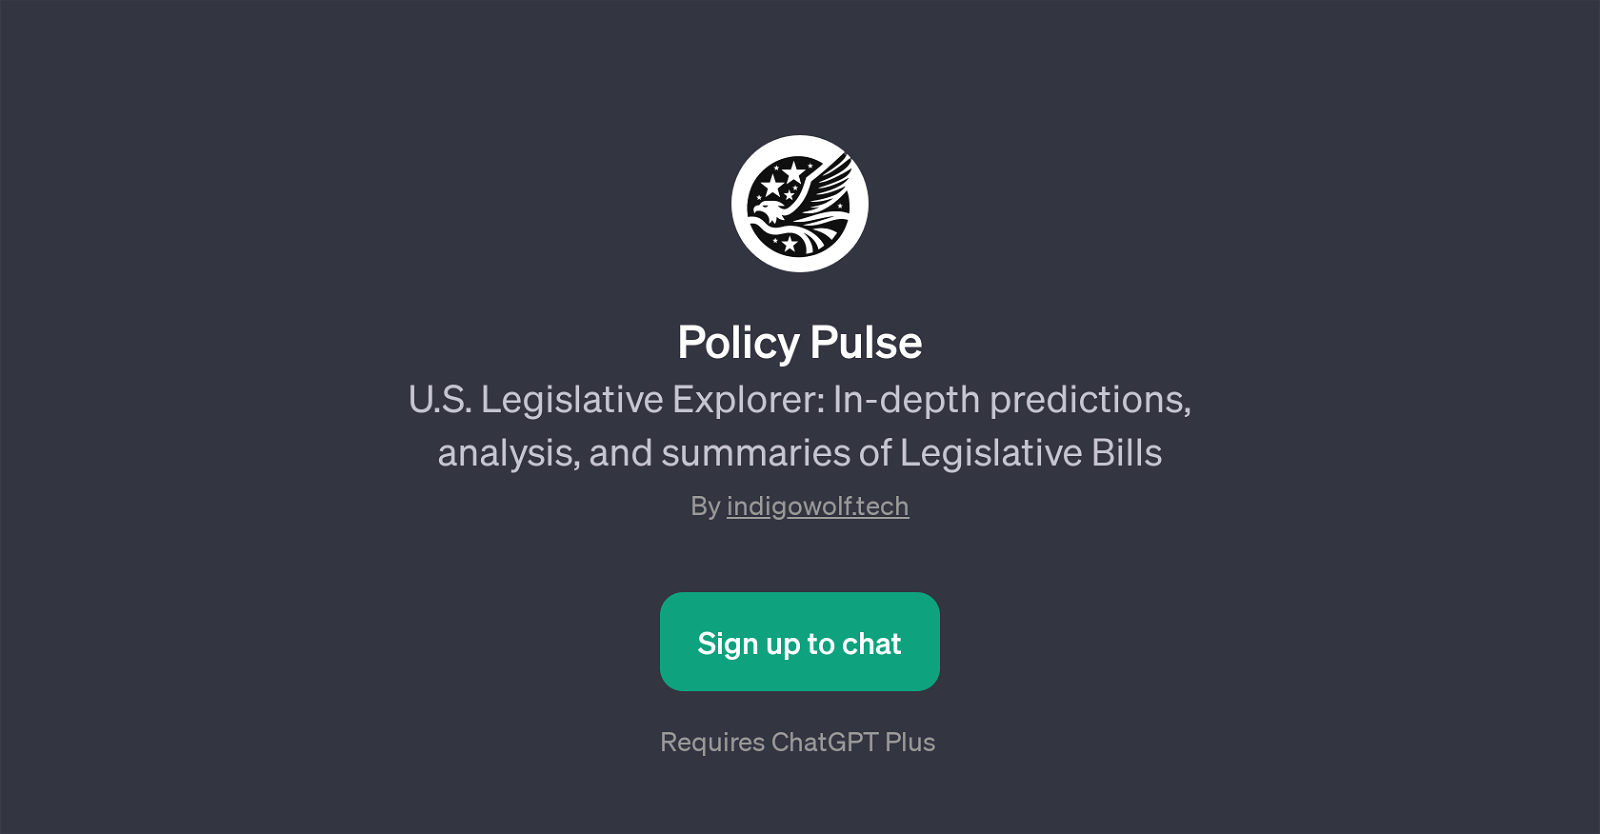 Policy Pulse website